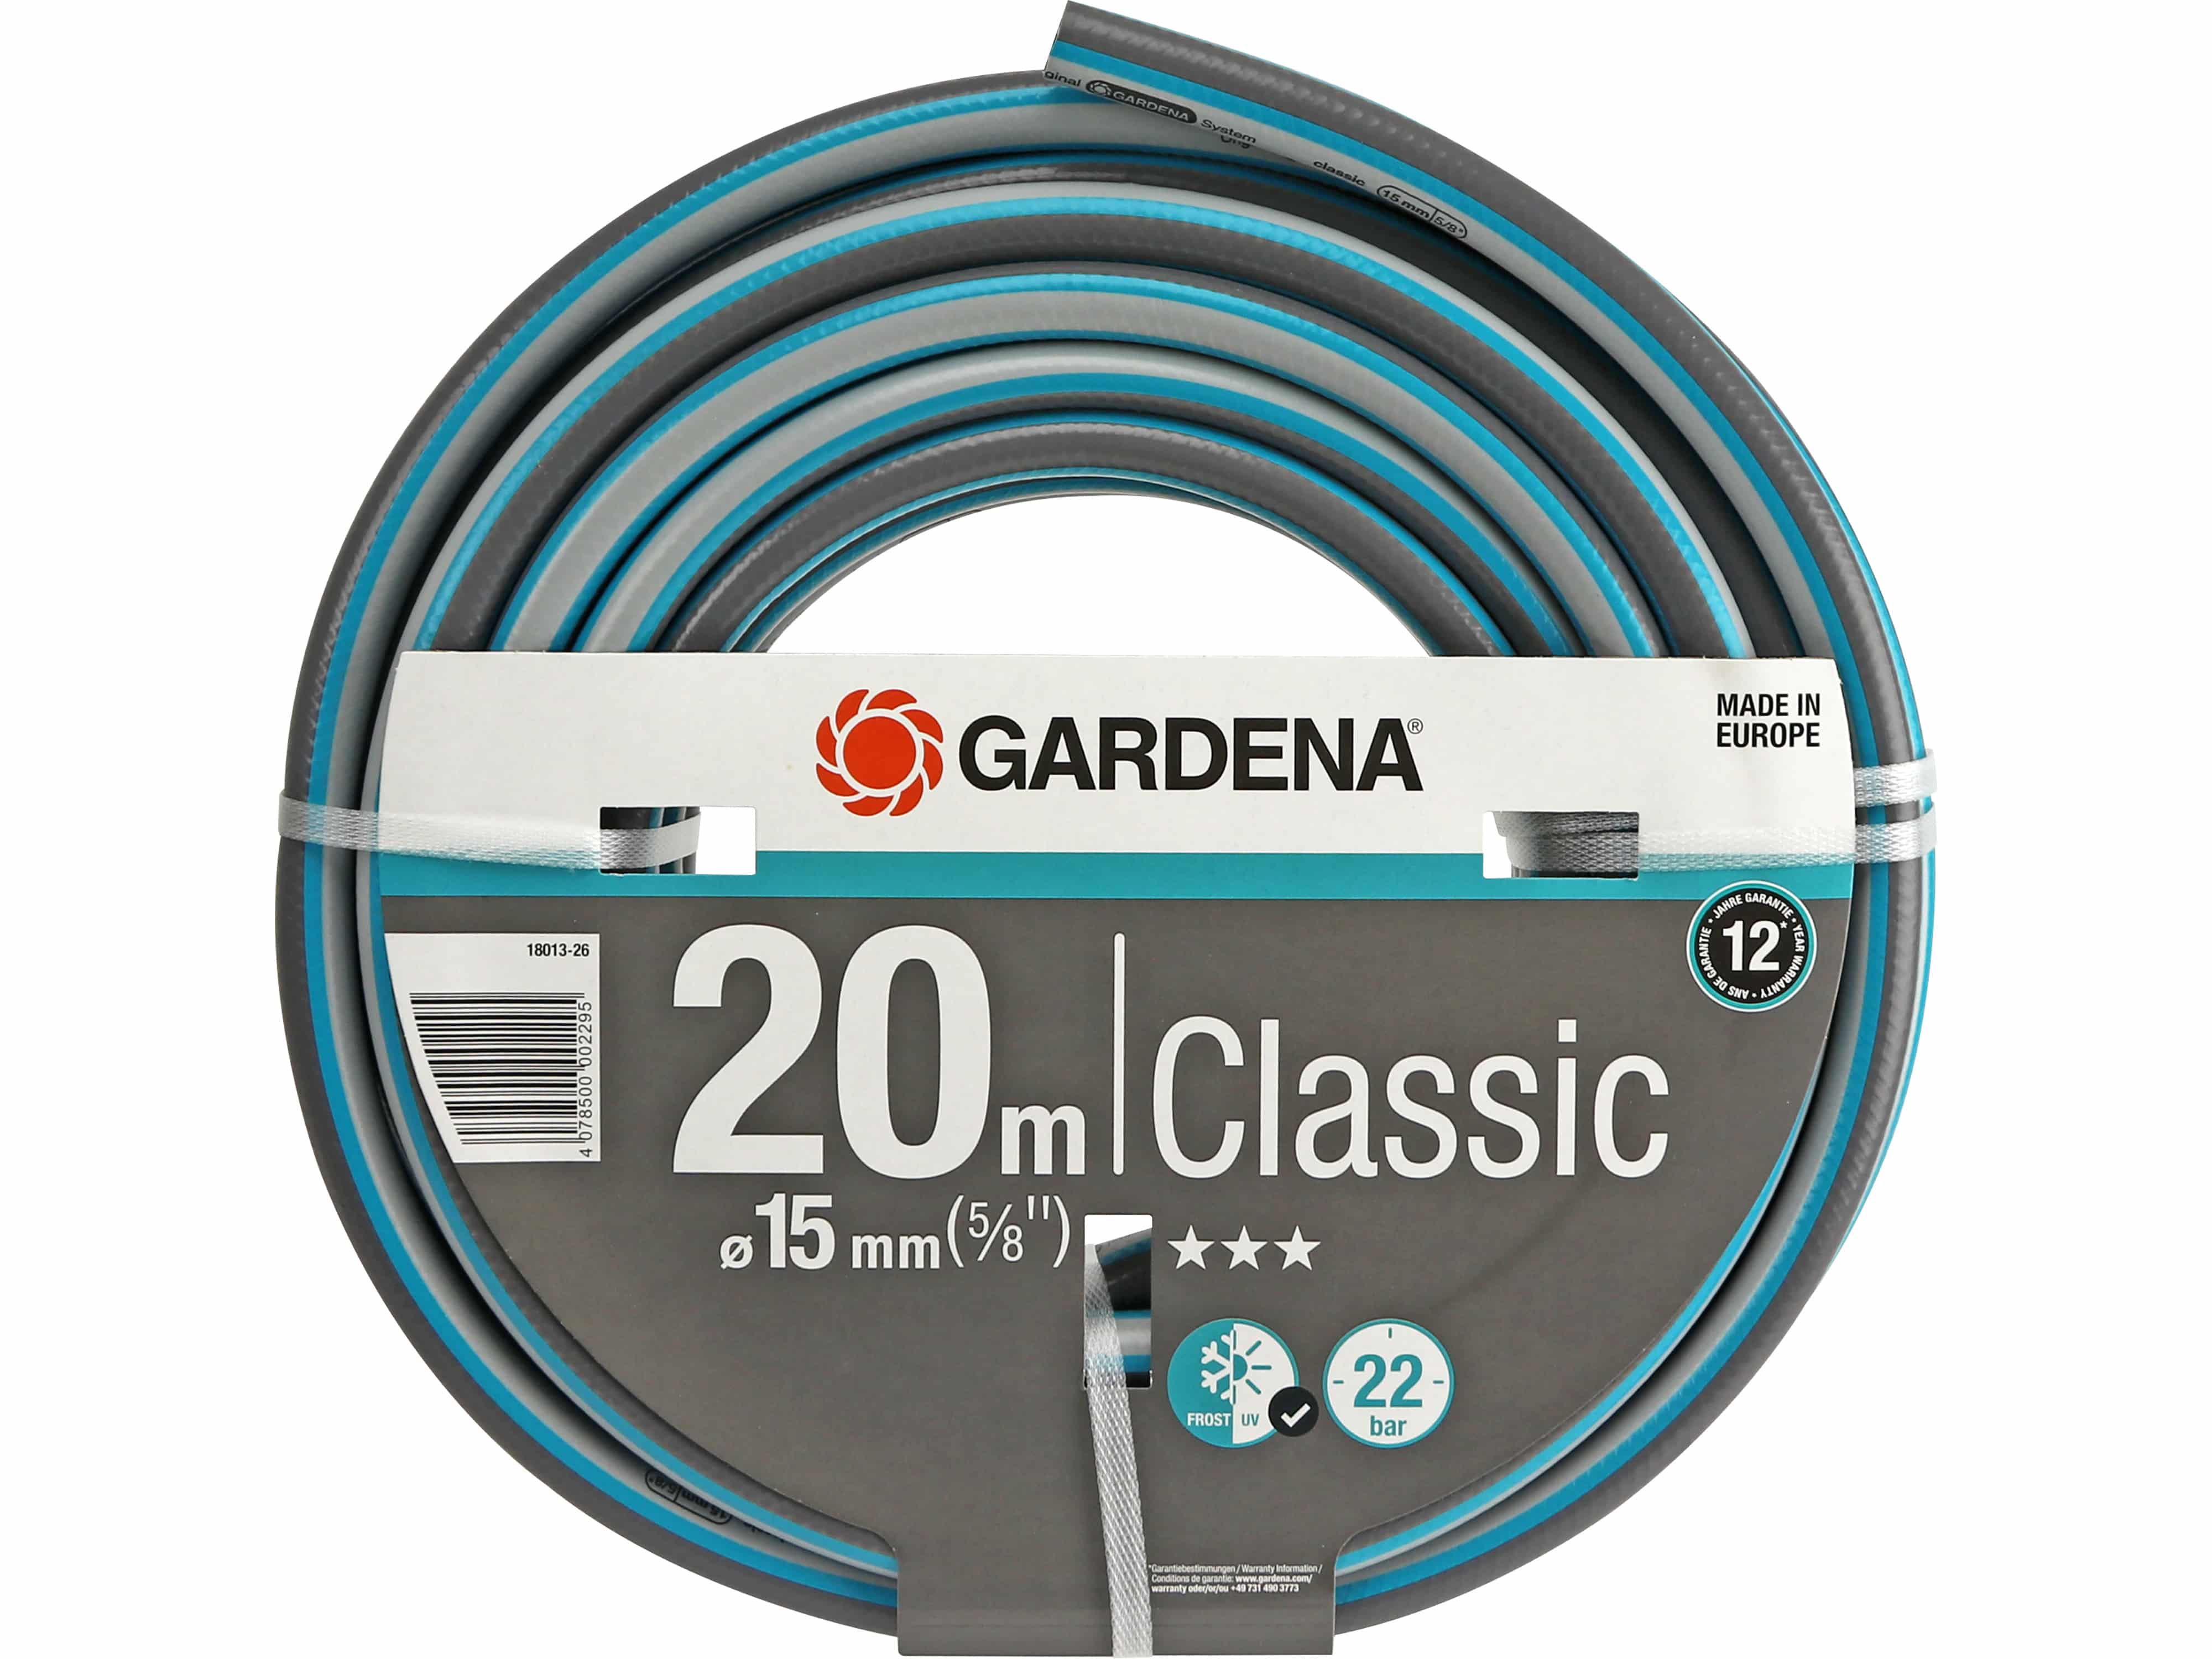 GARDENA Gartenschlauch 18013-26 Classic, 20 m, 15 mm (5/8")